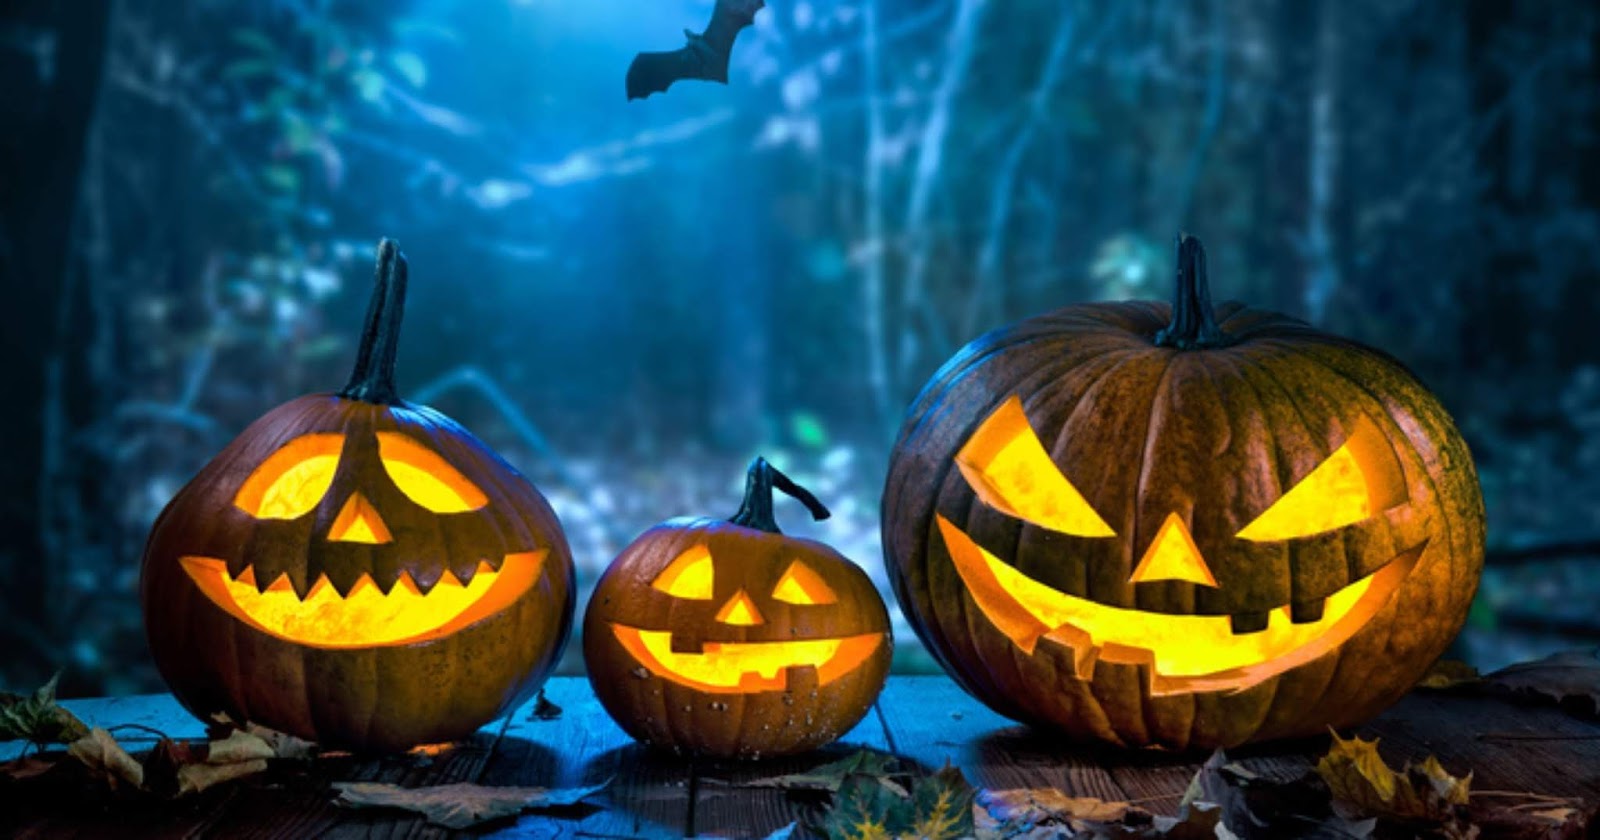 Creepy Halloween Pumpkin and Jack O Lantern picture